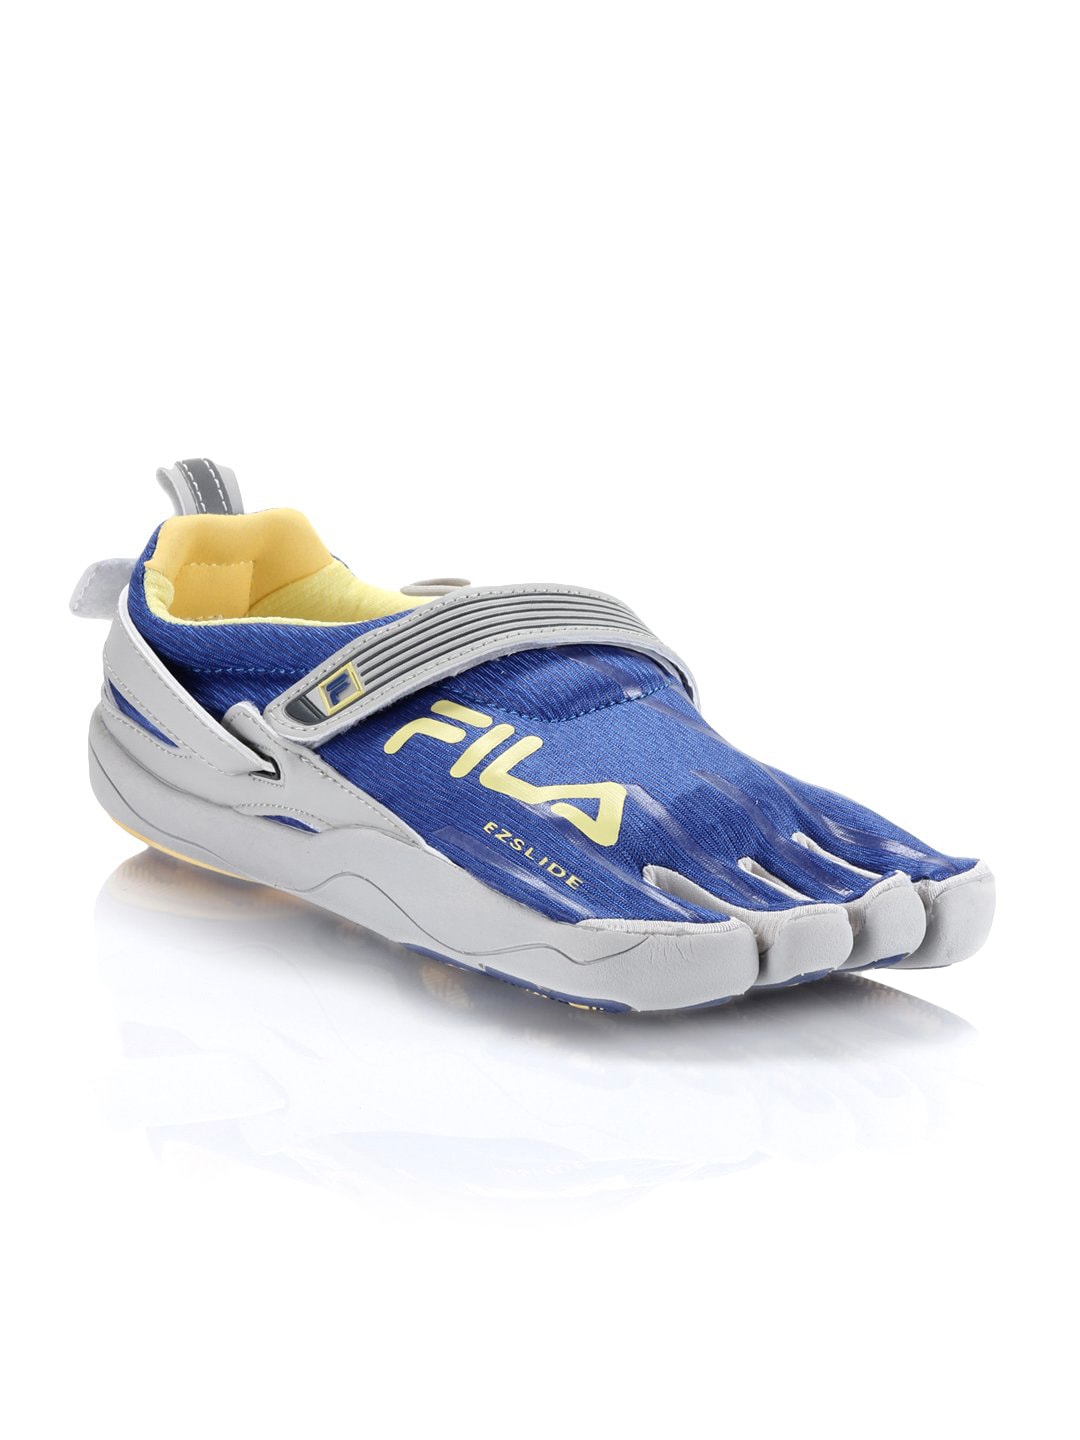 Fila Unisex Skeletoes 2.0 Blue Shoes